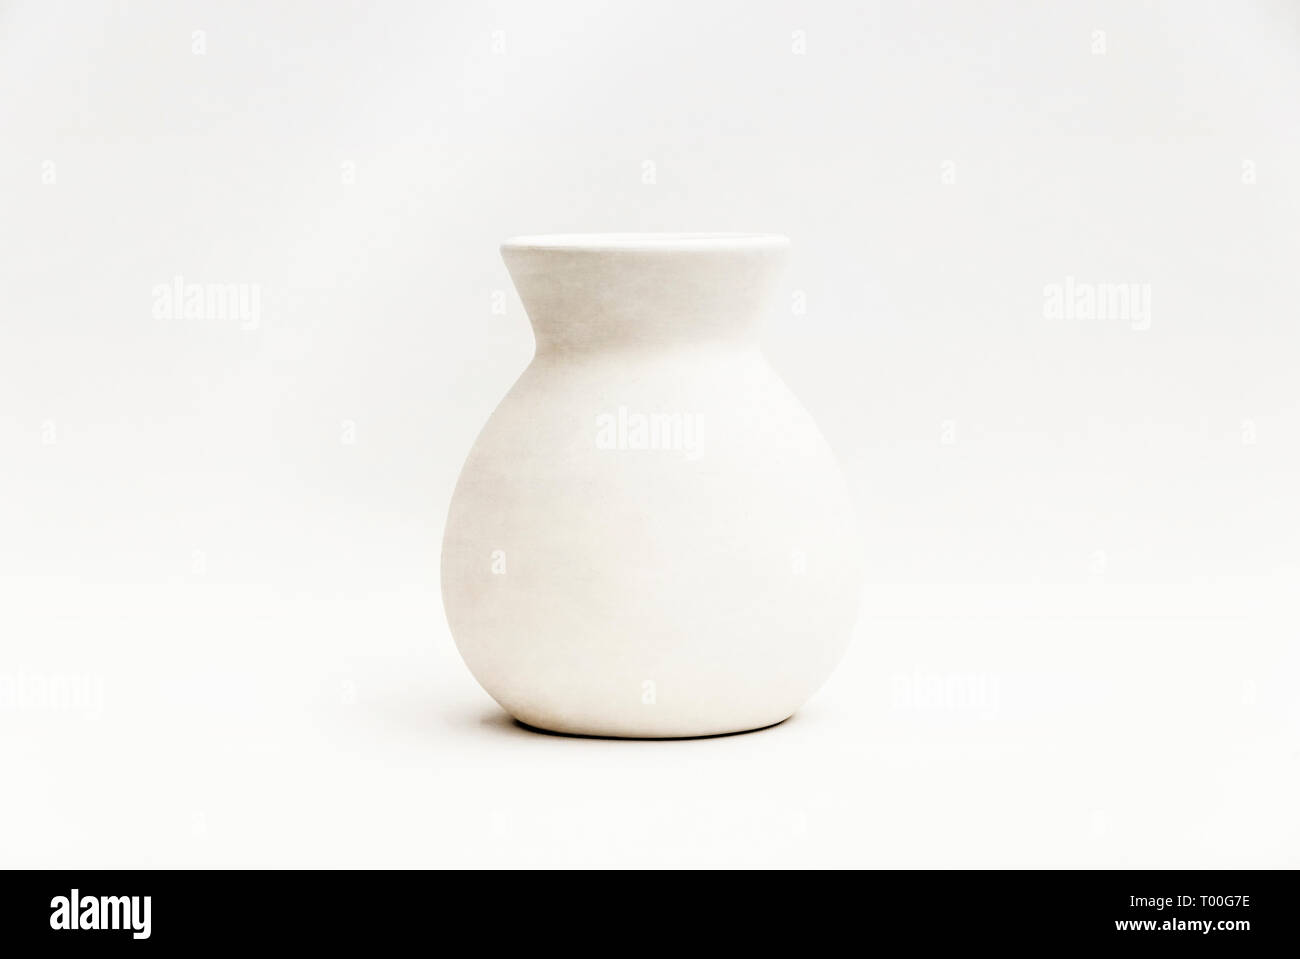 White on white white vase on white background minimalist image Stock Photo